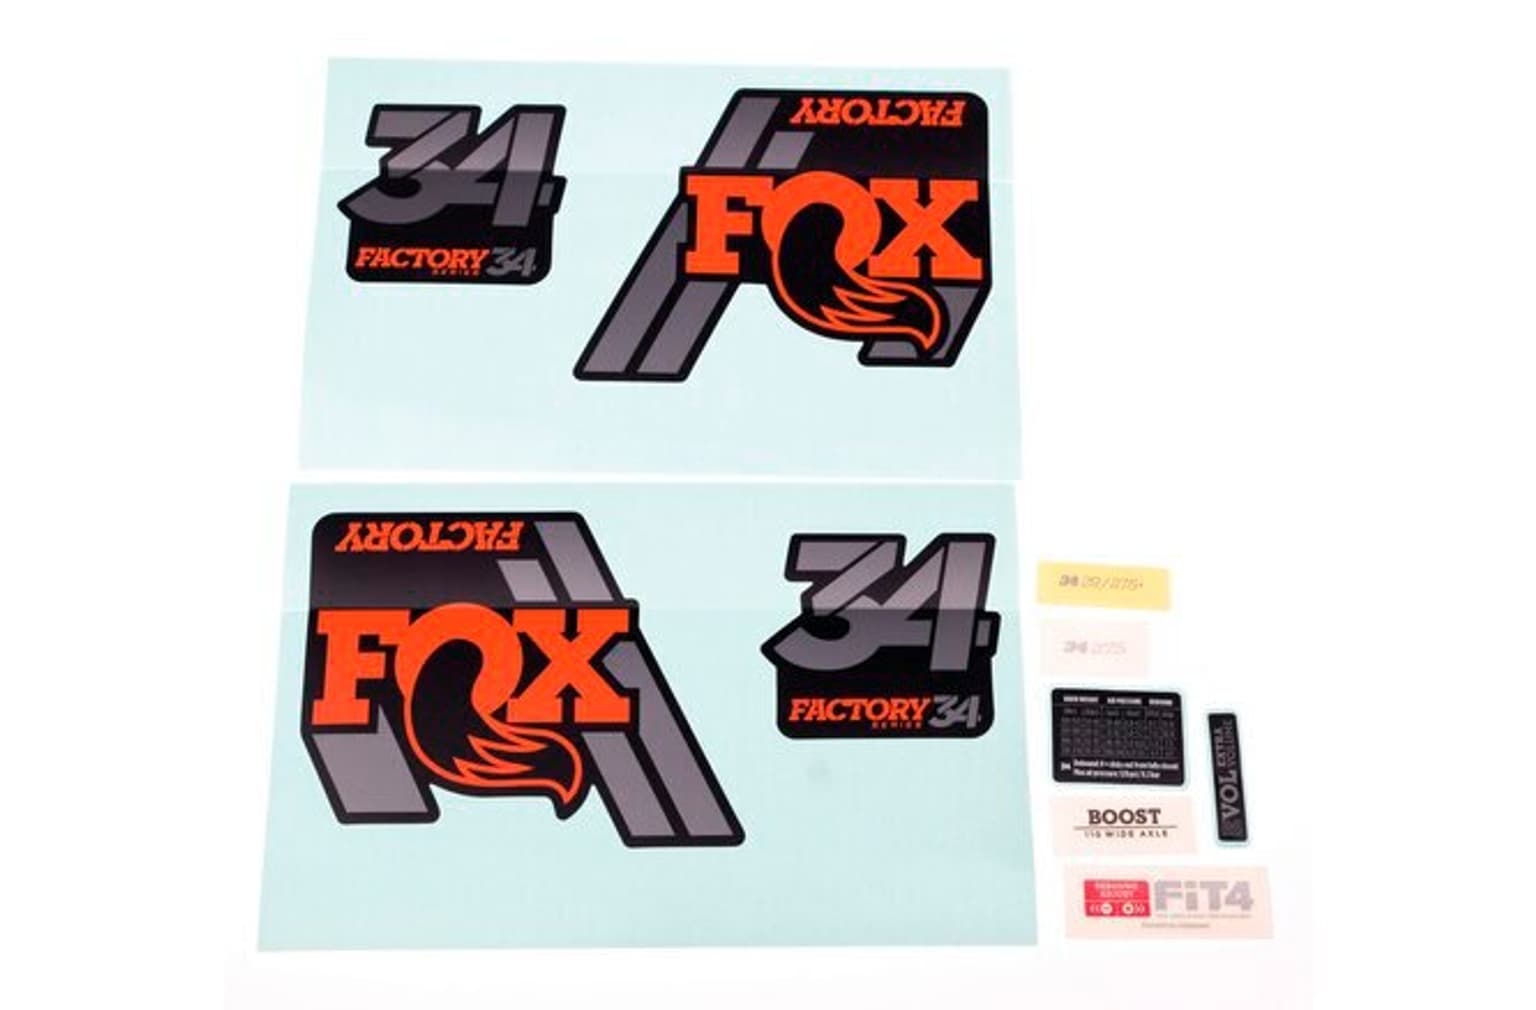 Fox Fox 18 34 F-S orange Logo mat black Sticker 1